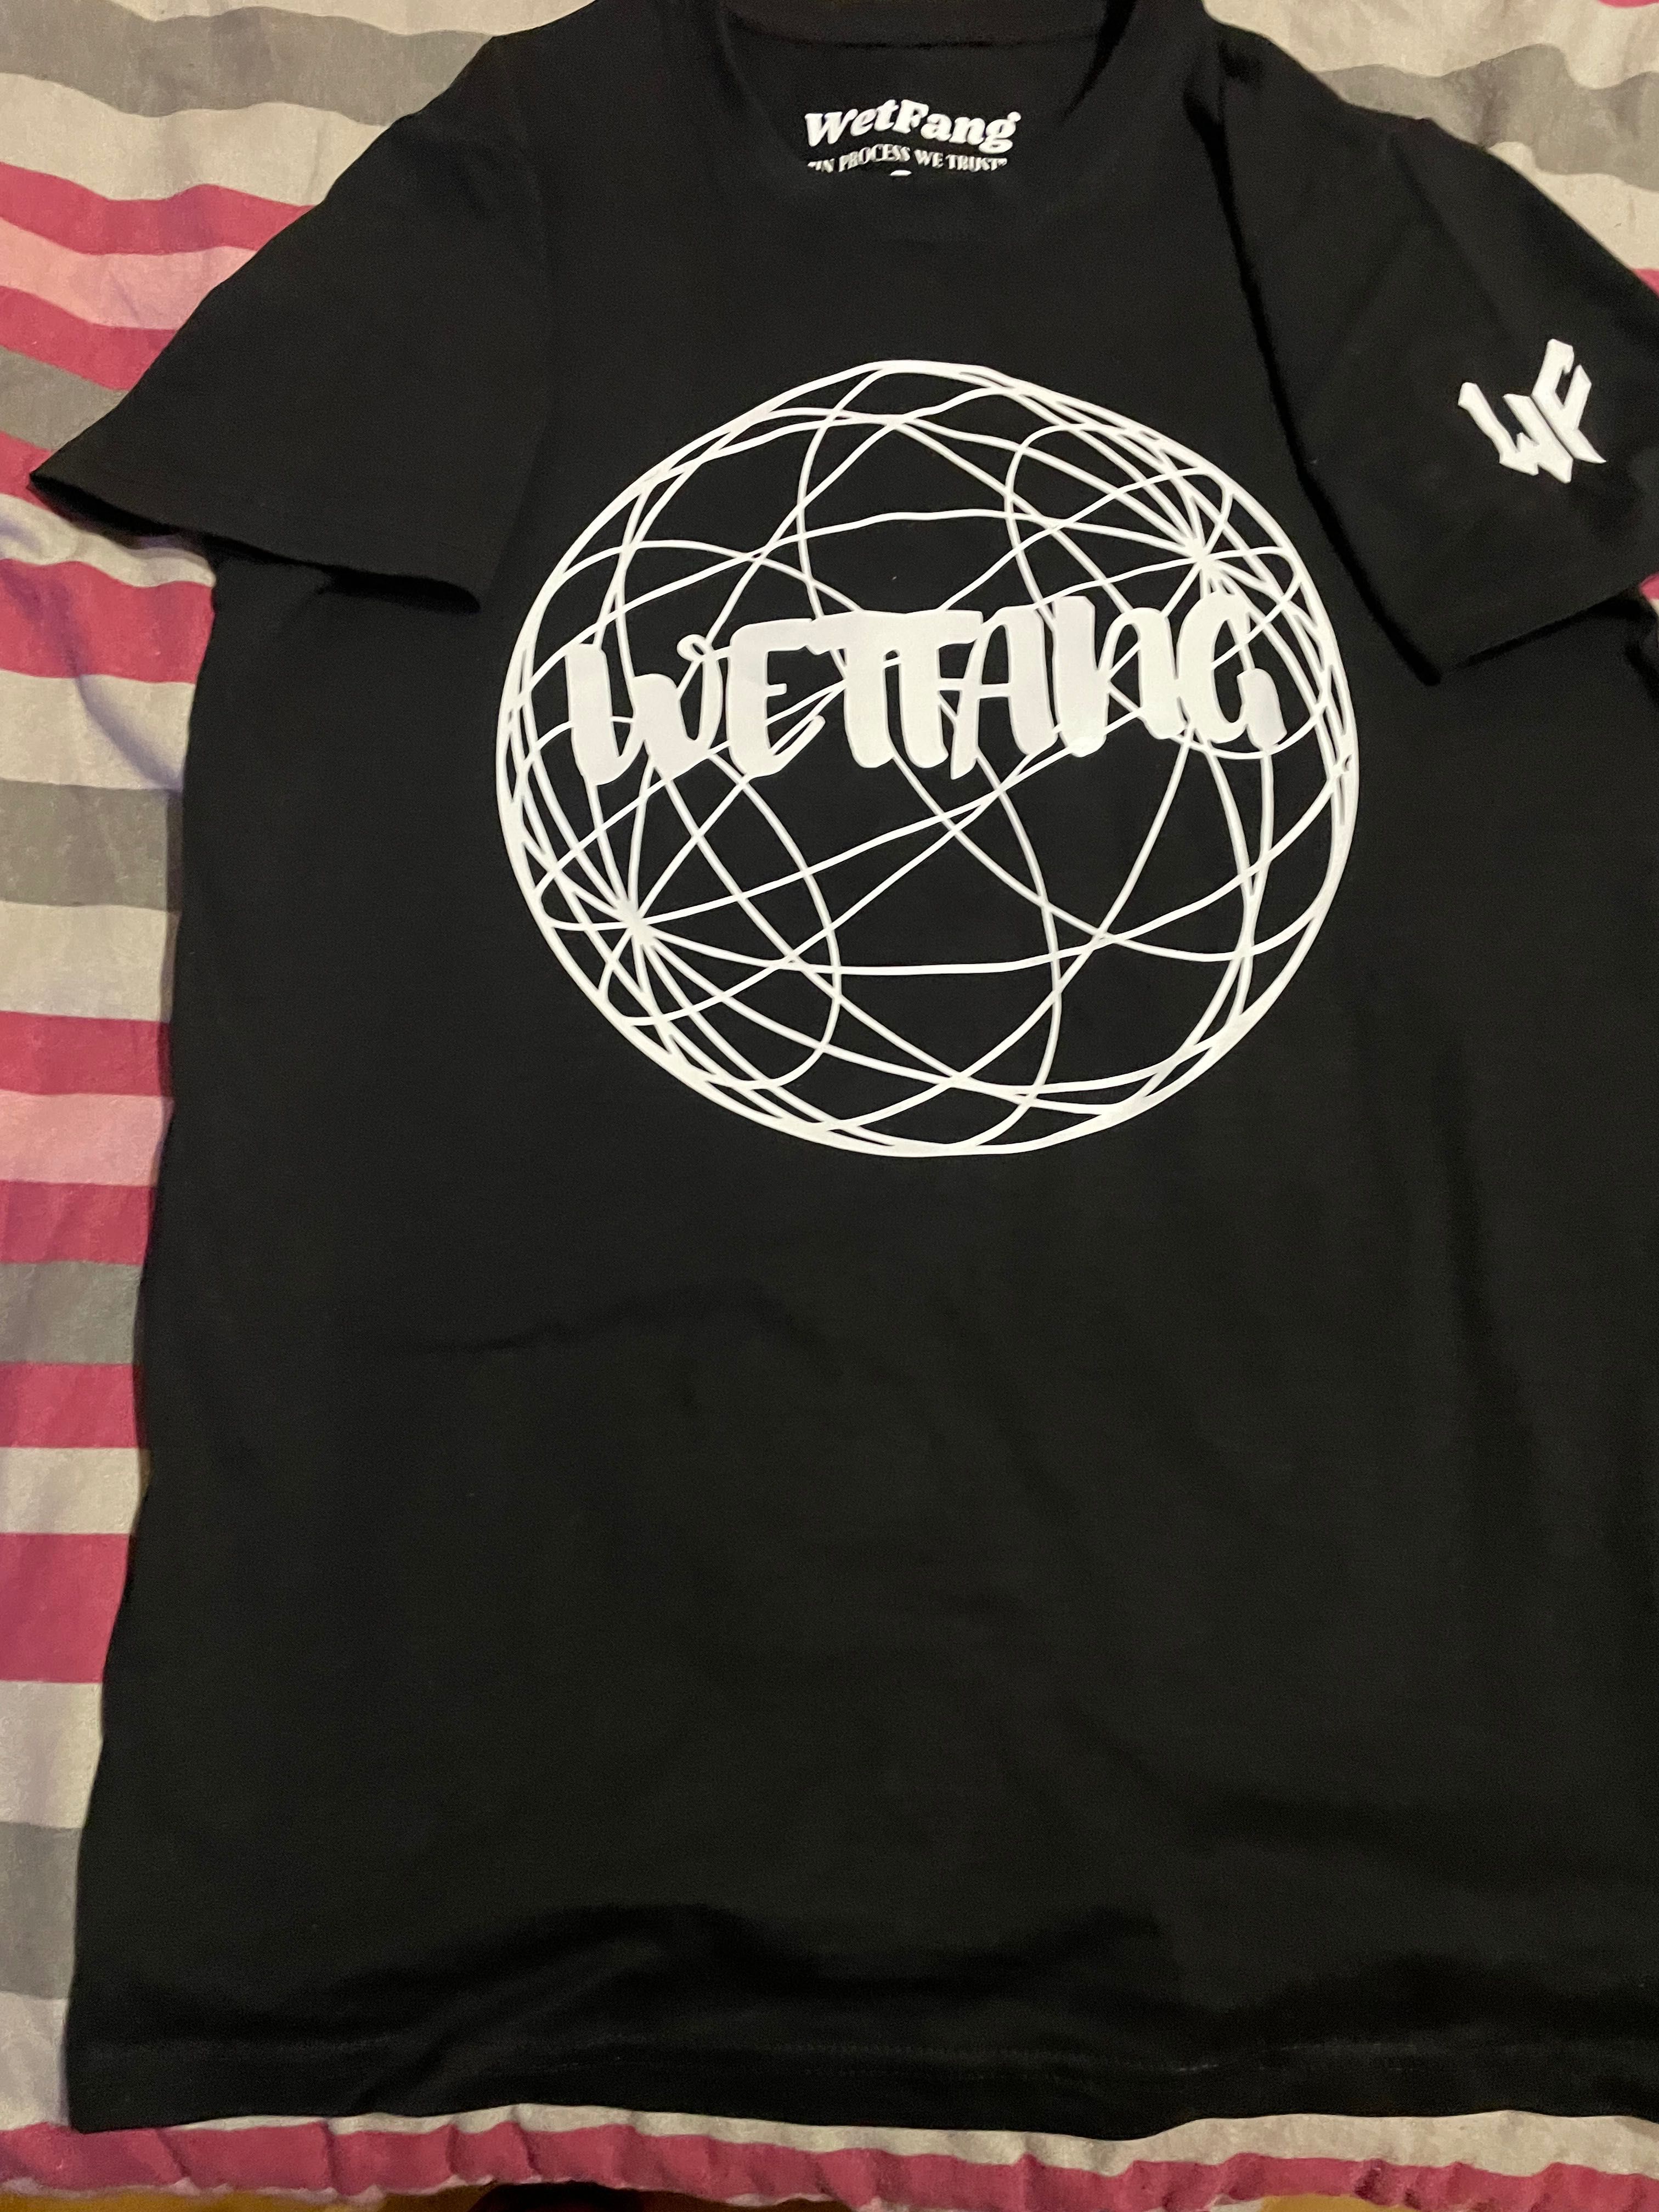 WetFang T-shirt New